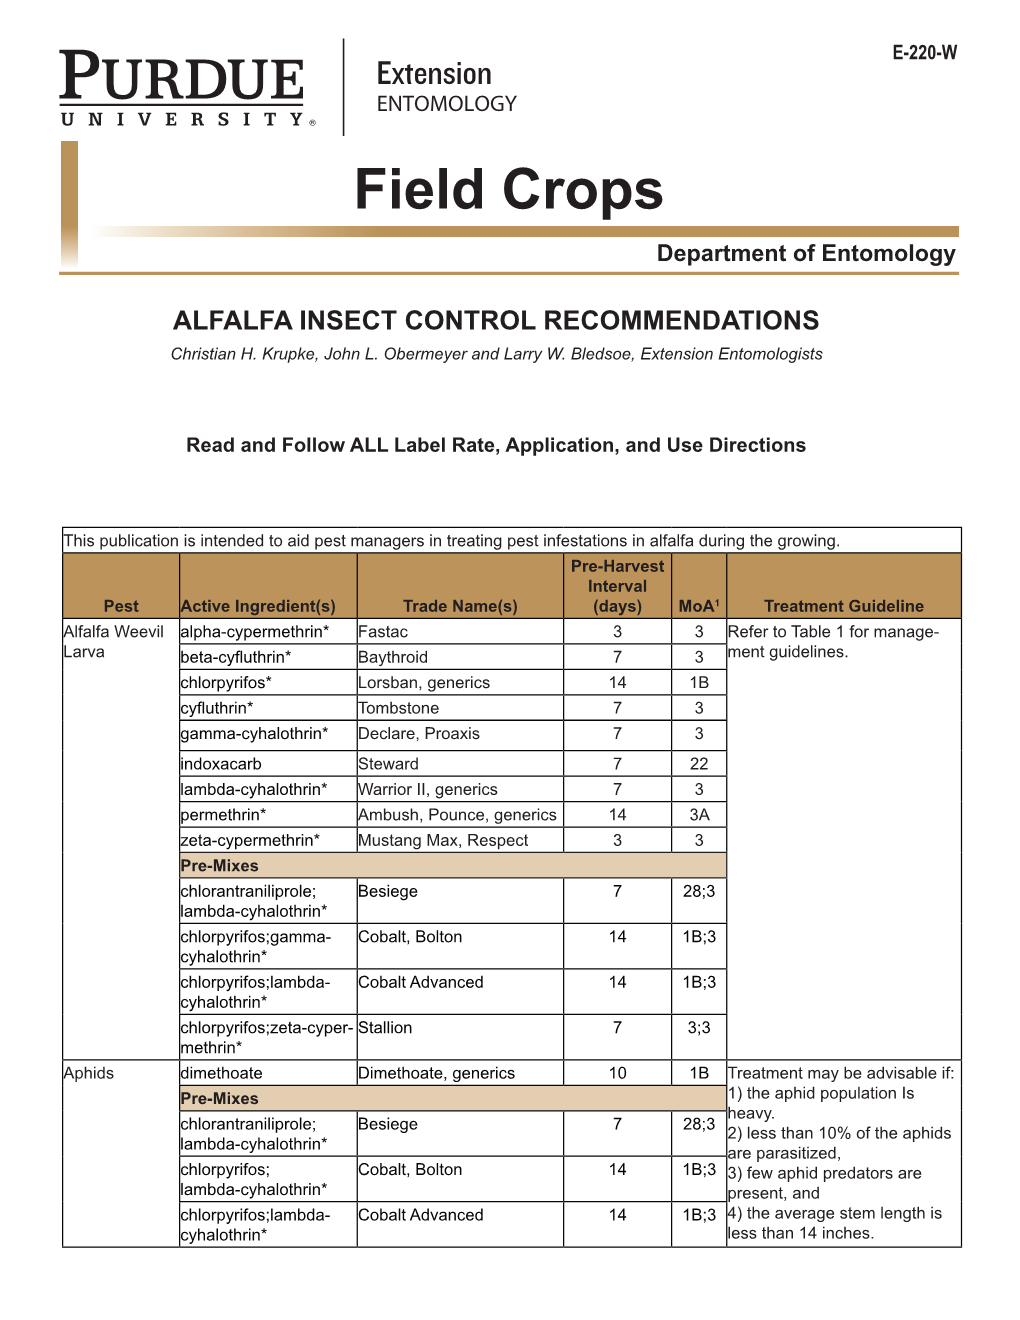 Field Crops Department of Entomology